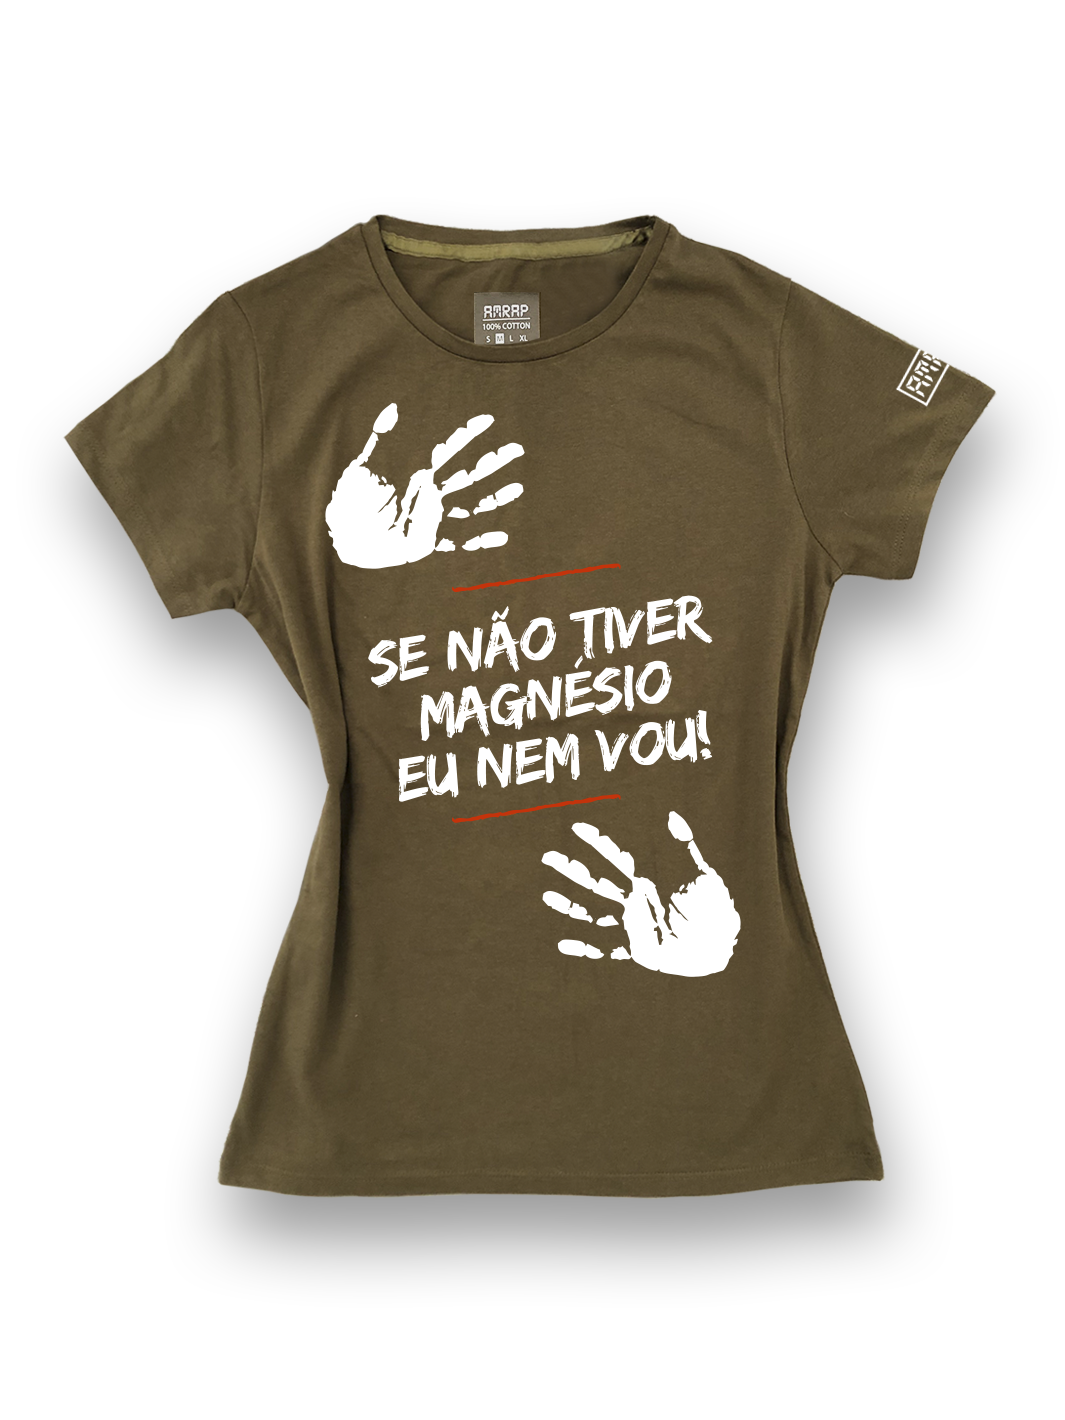 AMRAP T-Shirt Feminina Magnésio PT